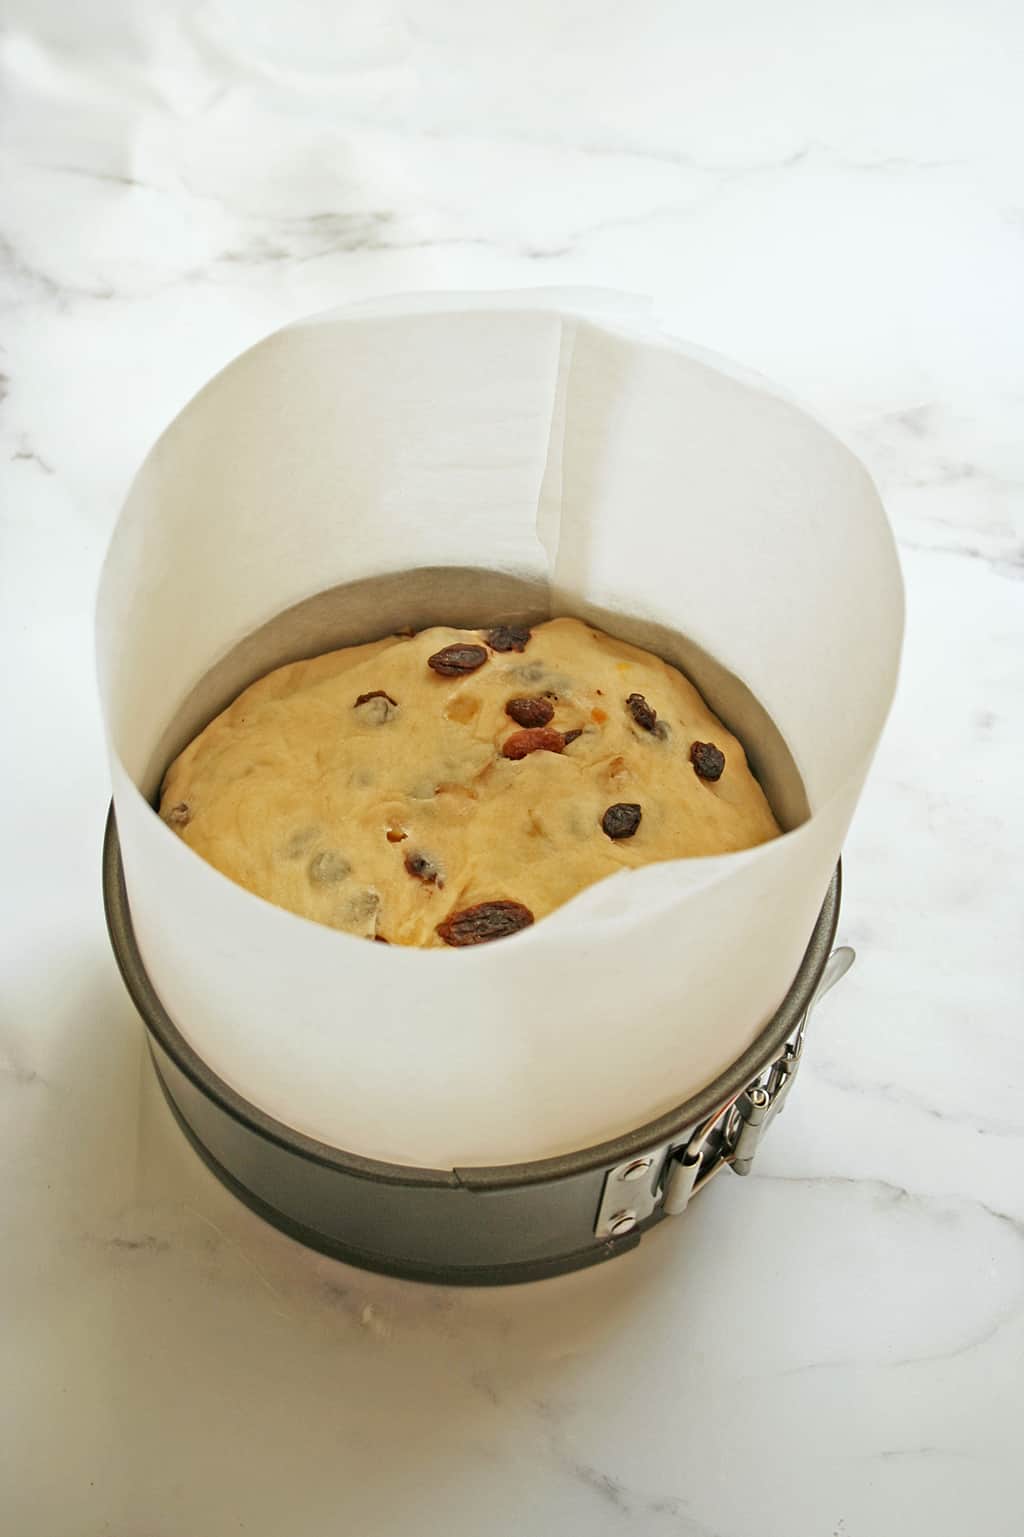 panettone dough rising in tin